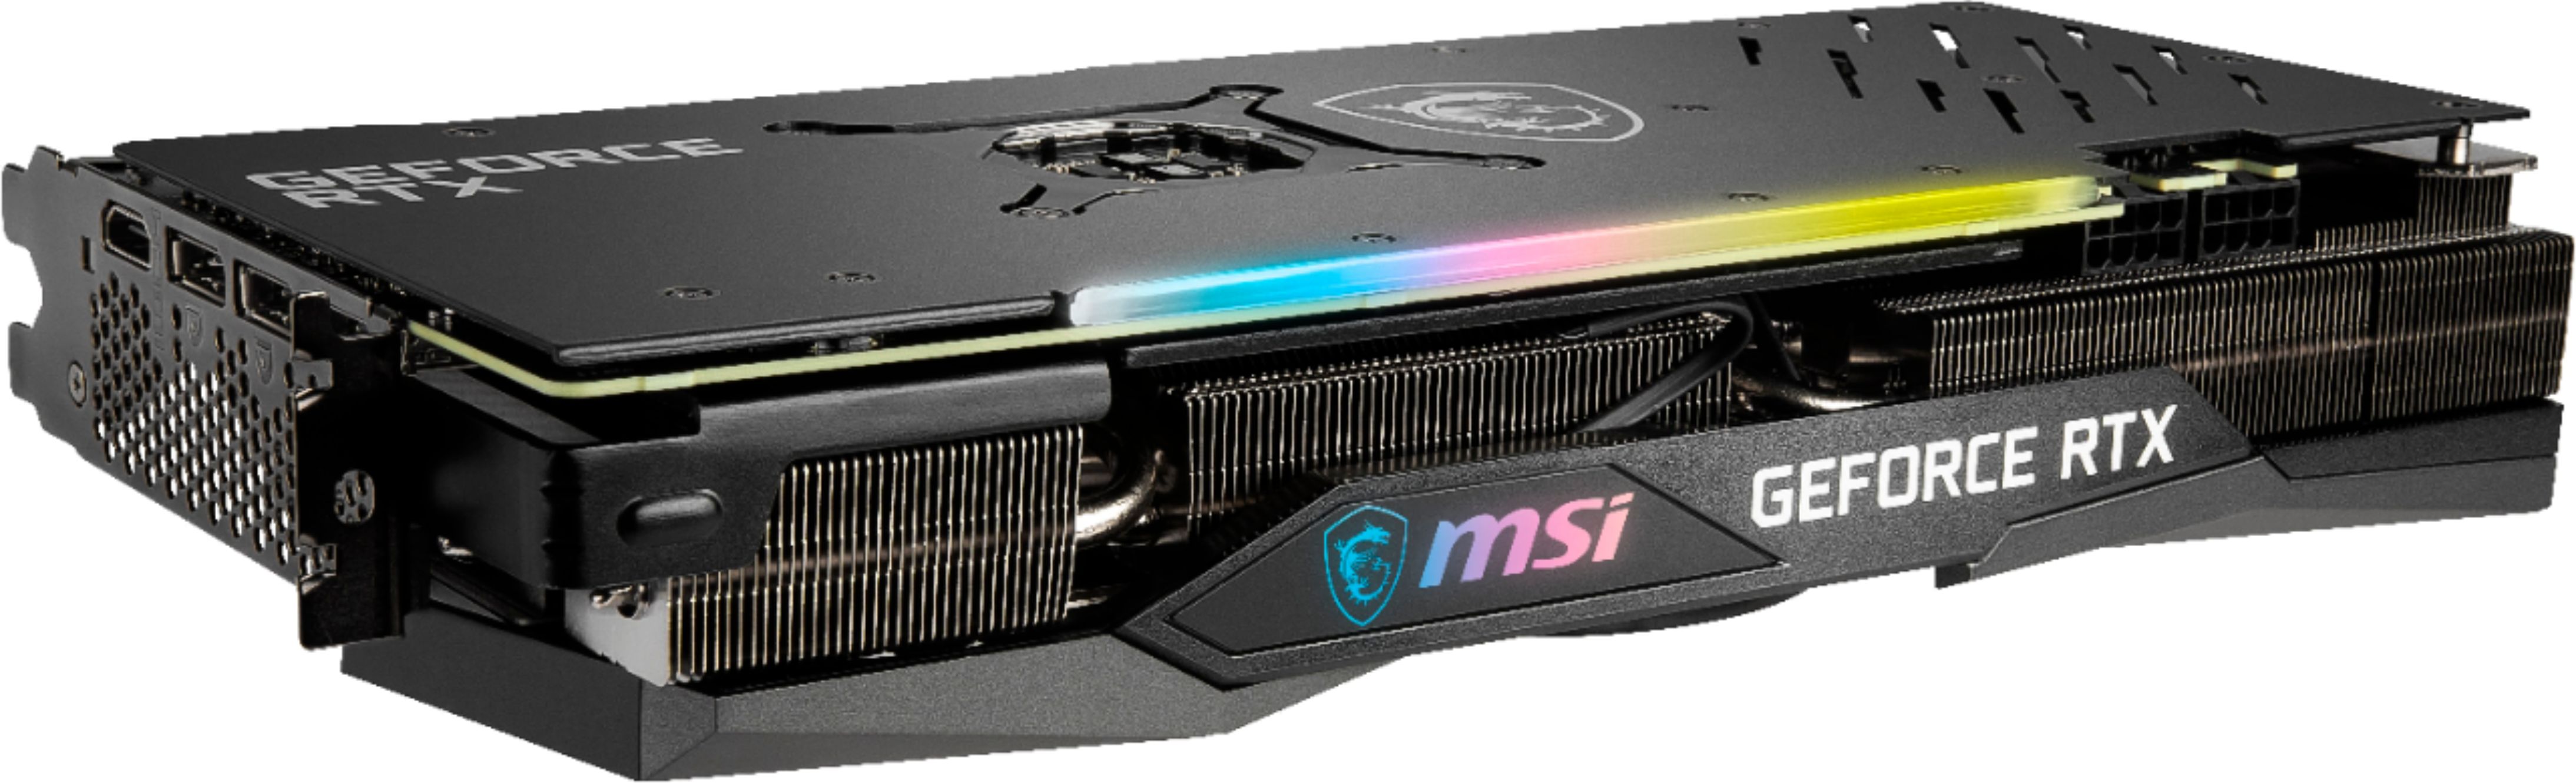 Best Buy: MSI NVIDIA GeForce RTX 3070 Gaming Z Trio LHR 8GB GDDR6